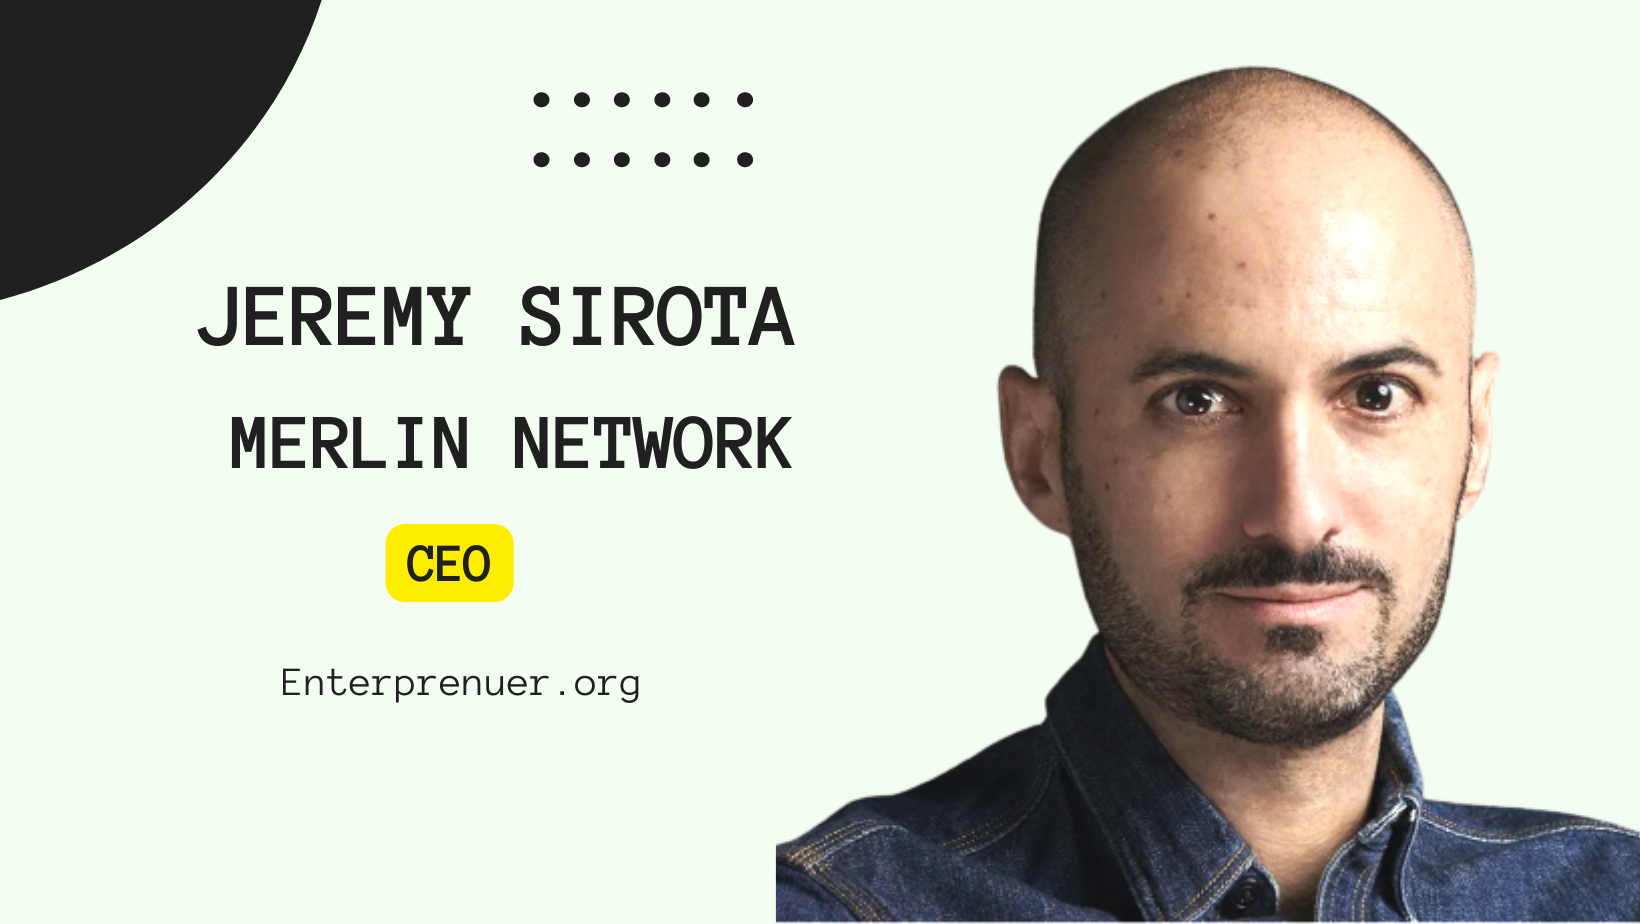 Jeremy Sirota CEO of Merlin Network